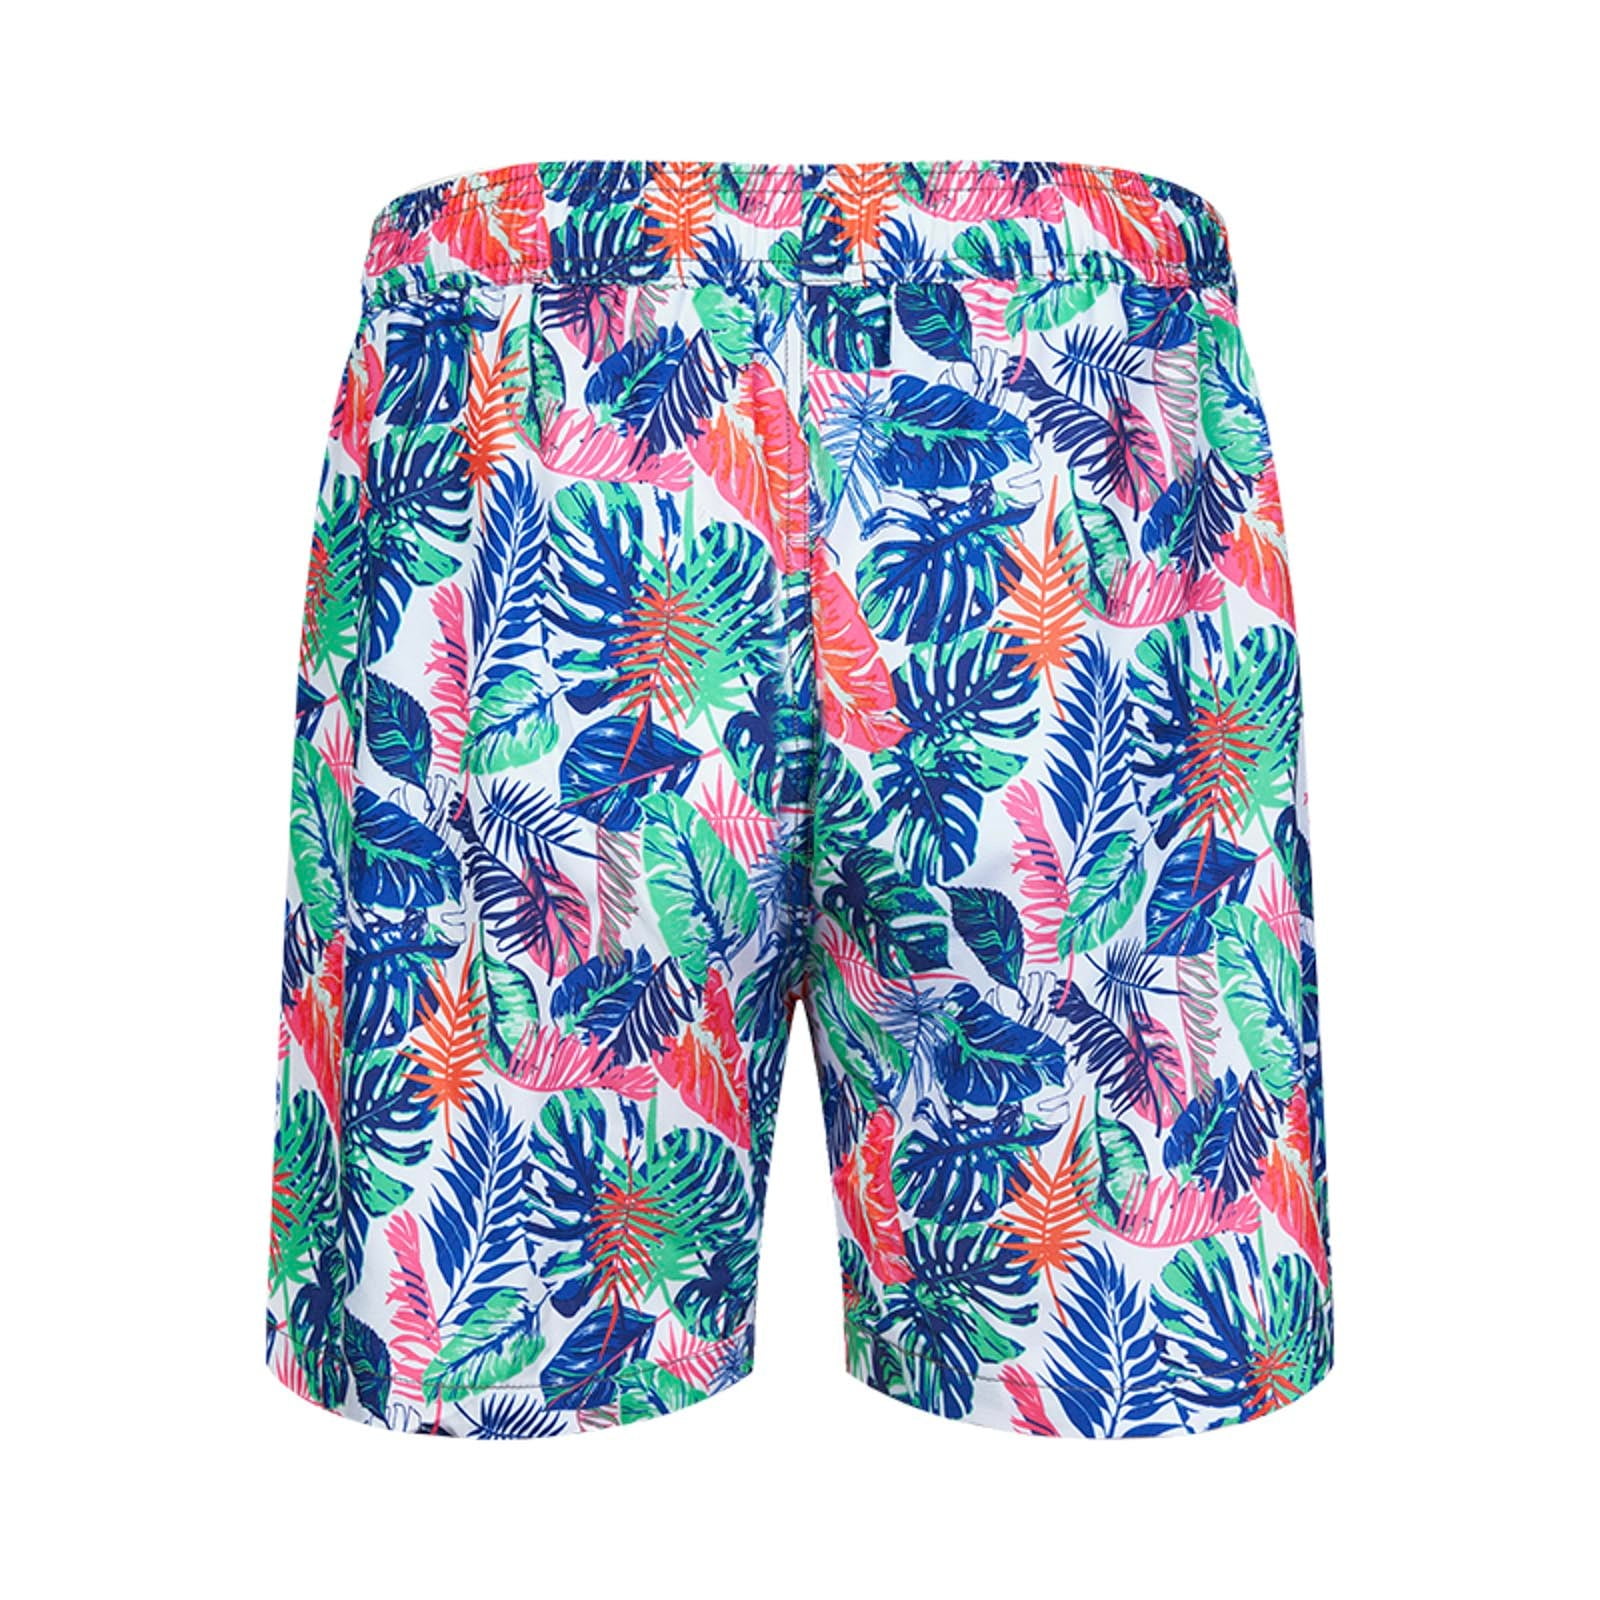 Aayomet Shorts Men Mens Summer Fashion Leisure Peach Skin Waterproof ...